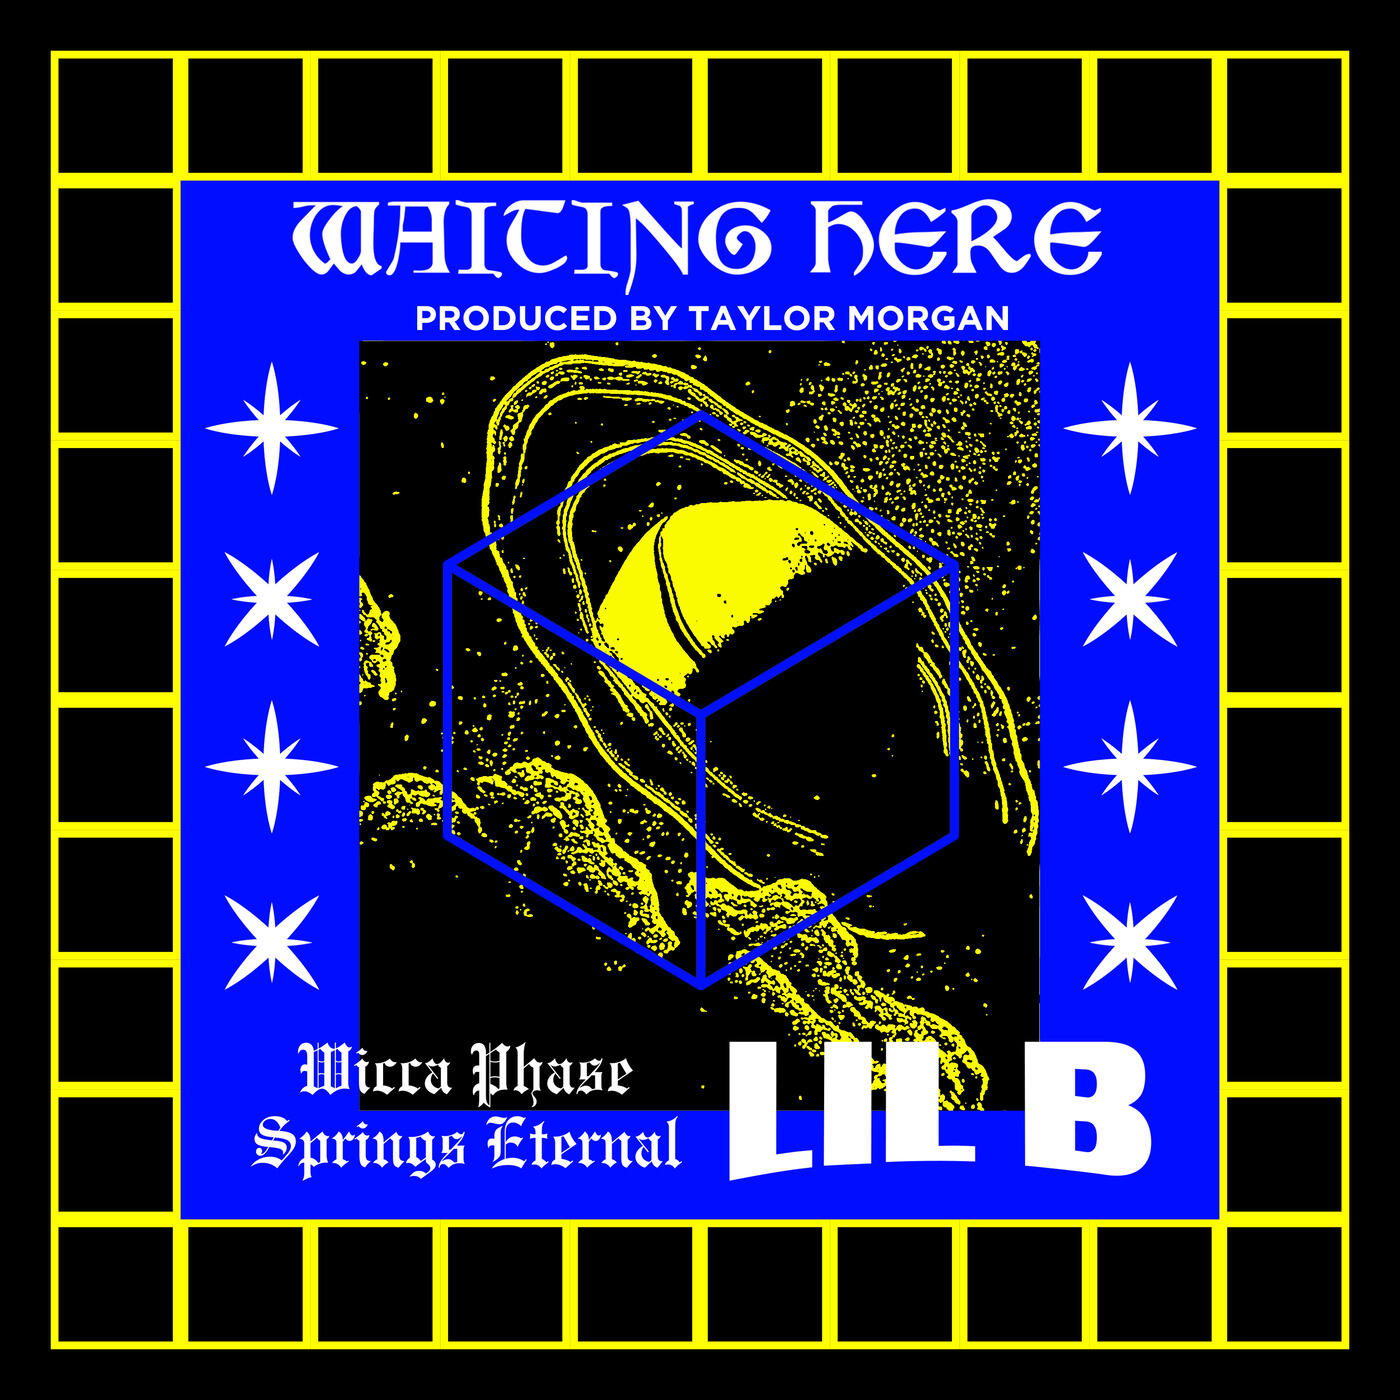 Wicca Phase Springs Eternal Waiting Here Iheartradio 1781